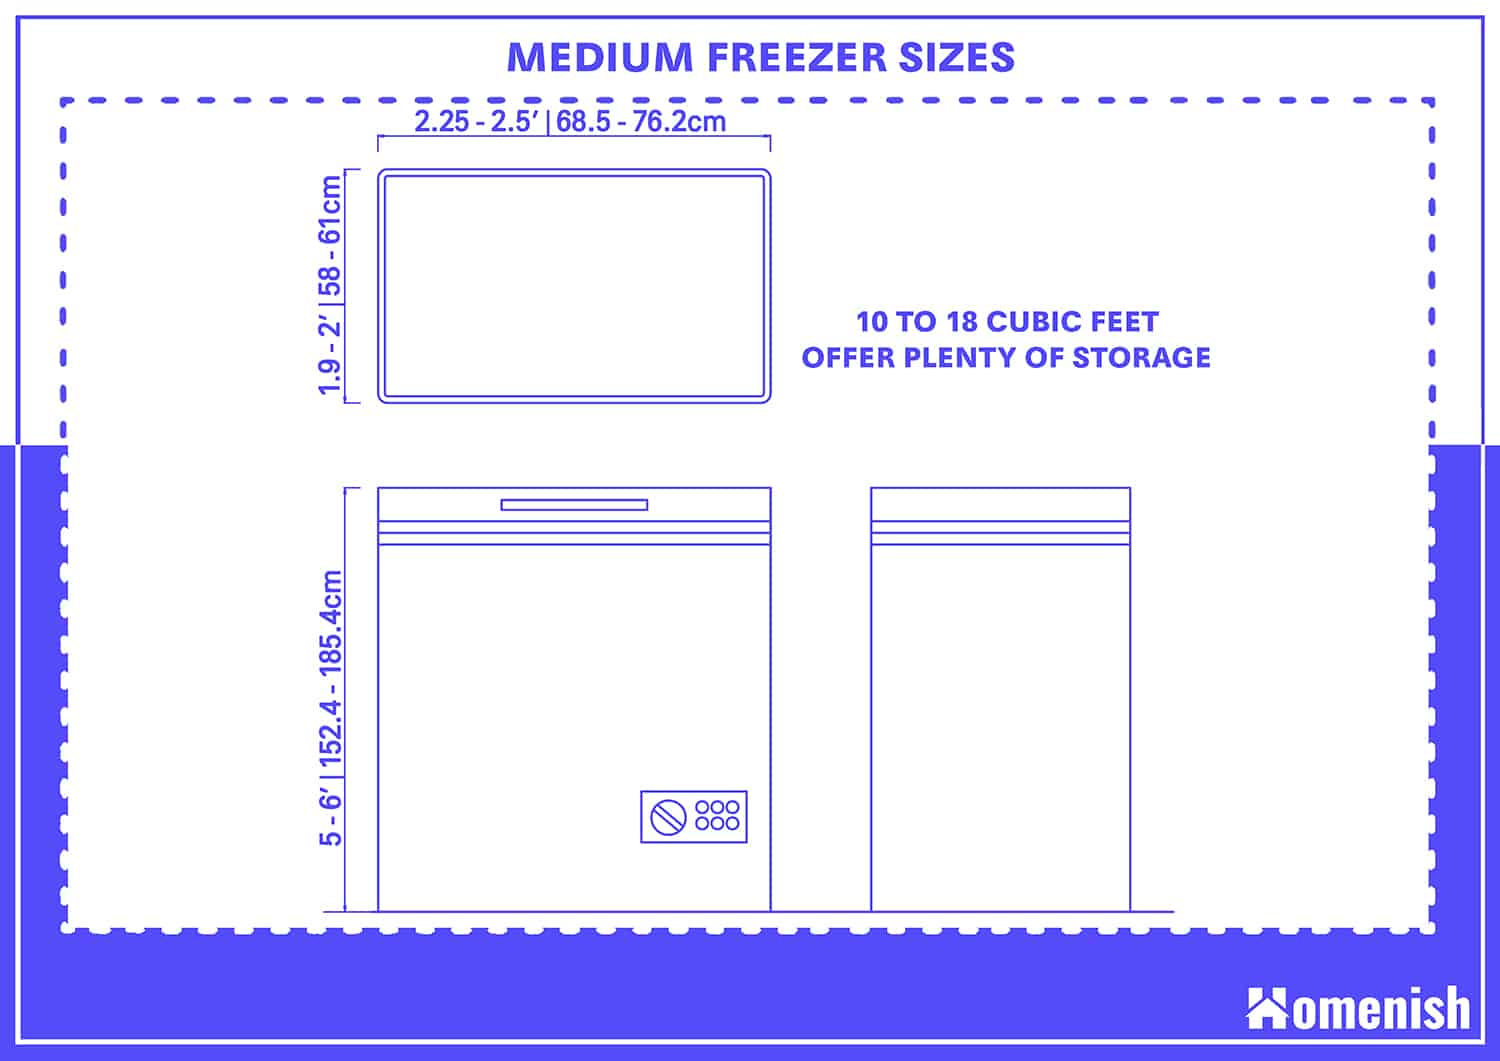 Medium-sized freezers